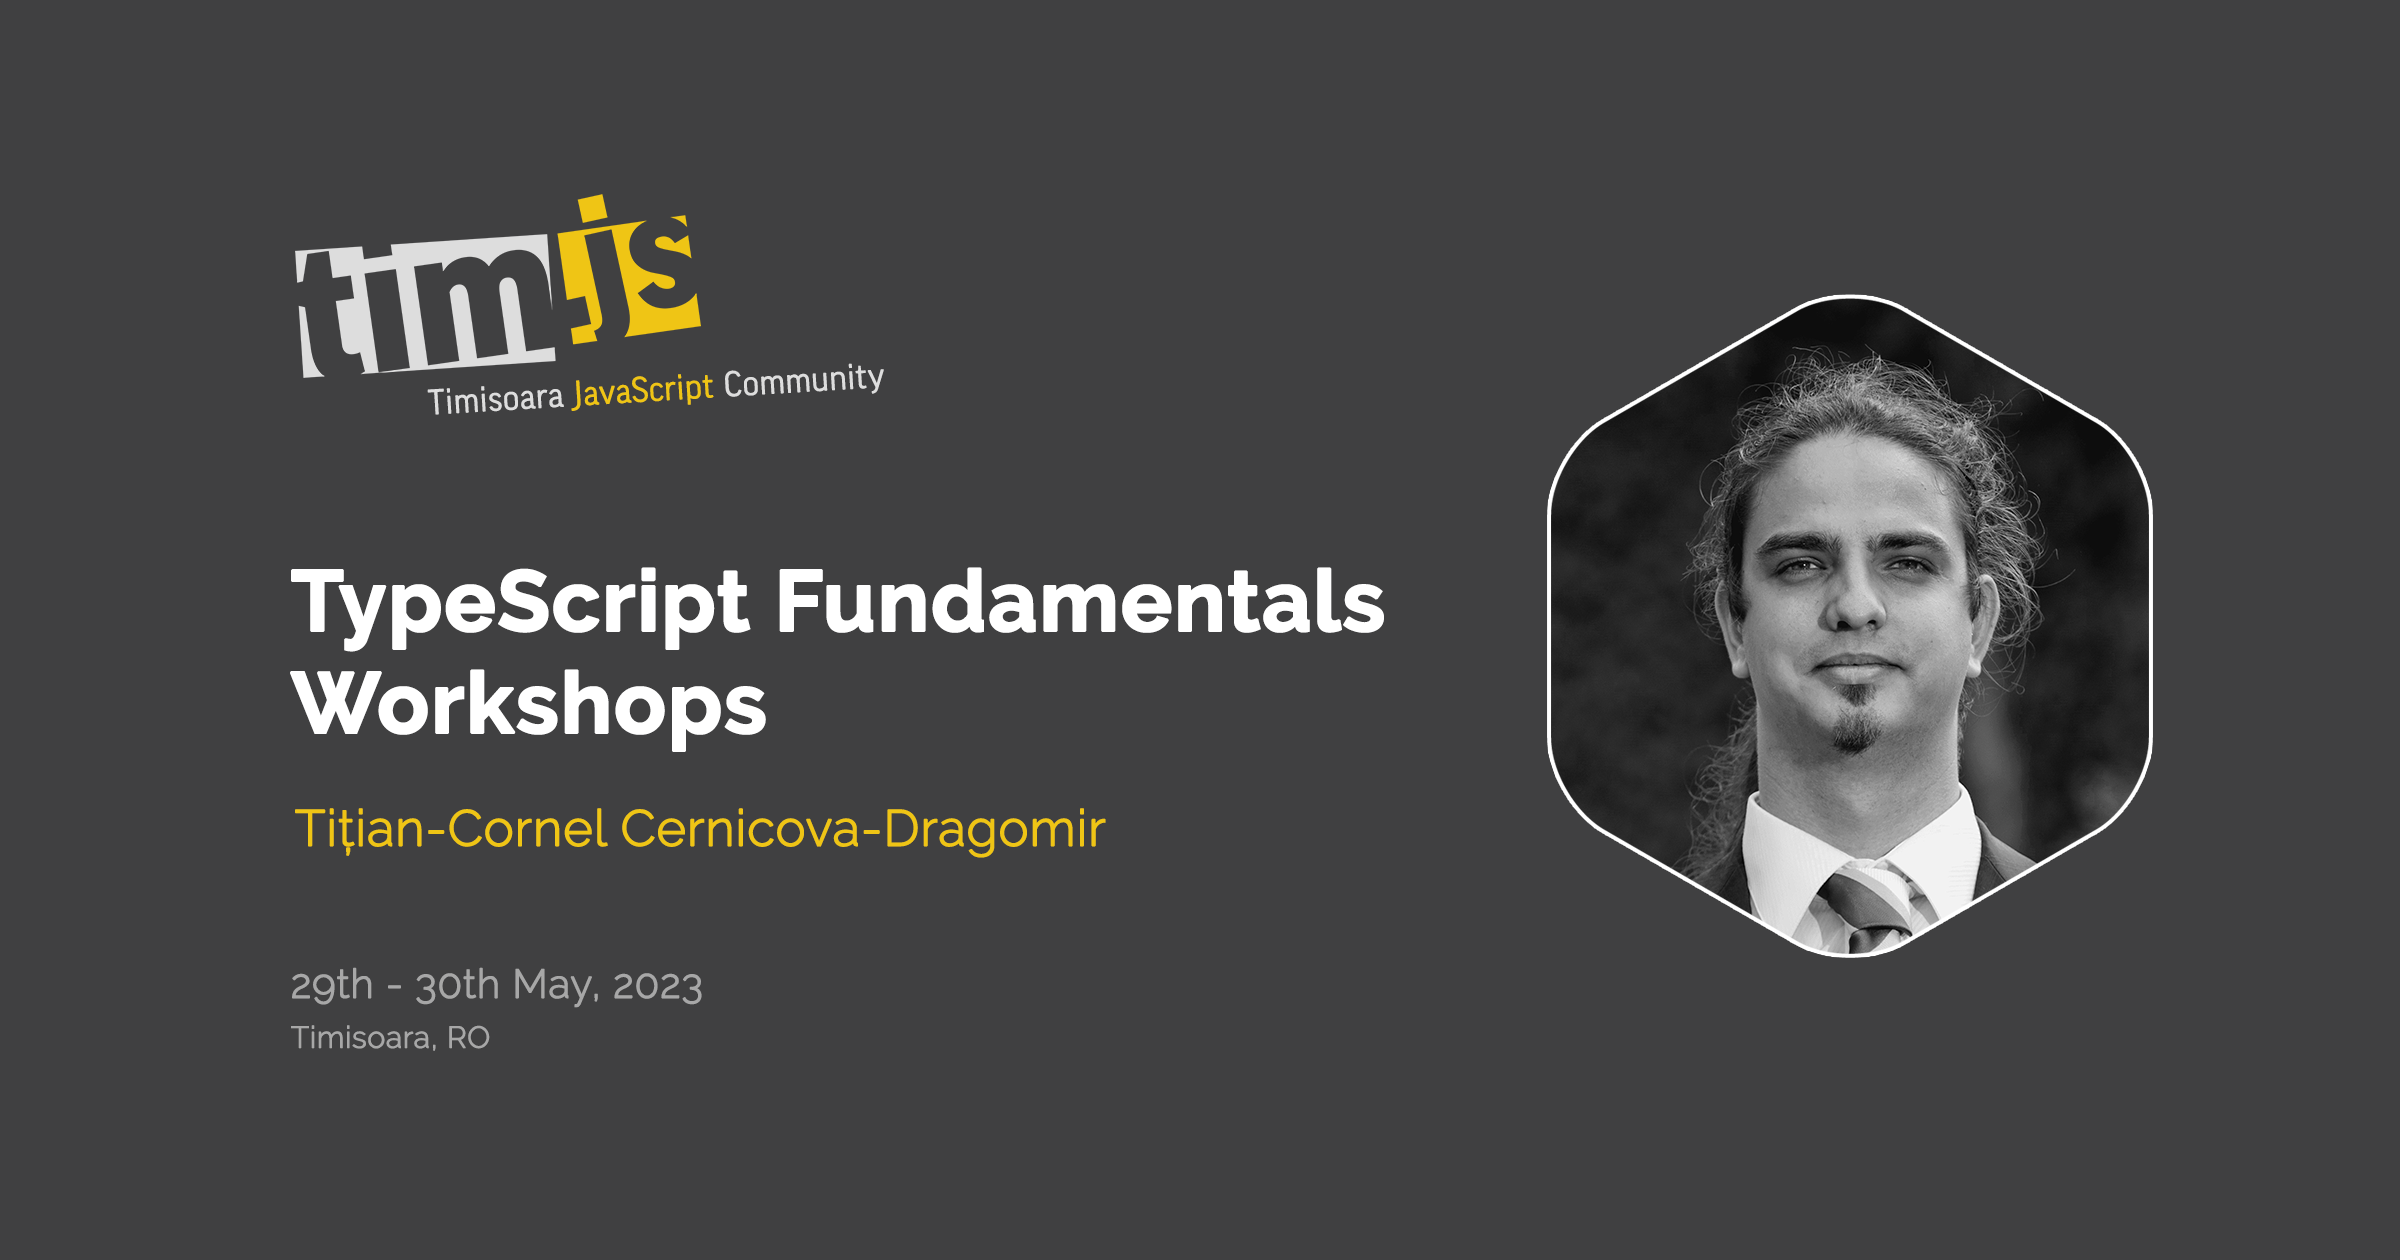 TypeScript Fundamentals Workshop, with Tițian-Cornel Cernicova-Dragomir, organized by tim.js (Timisoara JavaScript Community) between 29th-30th of May 2023